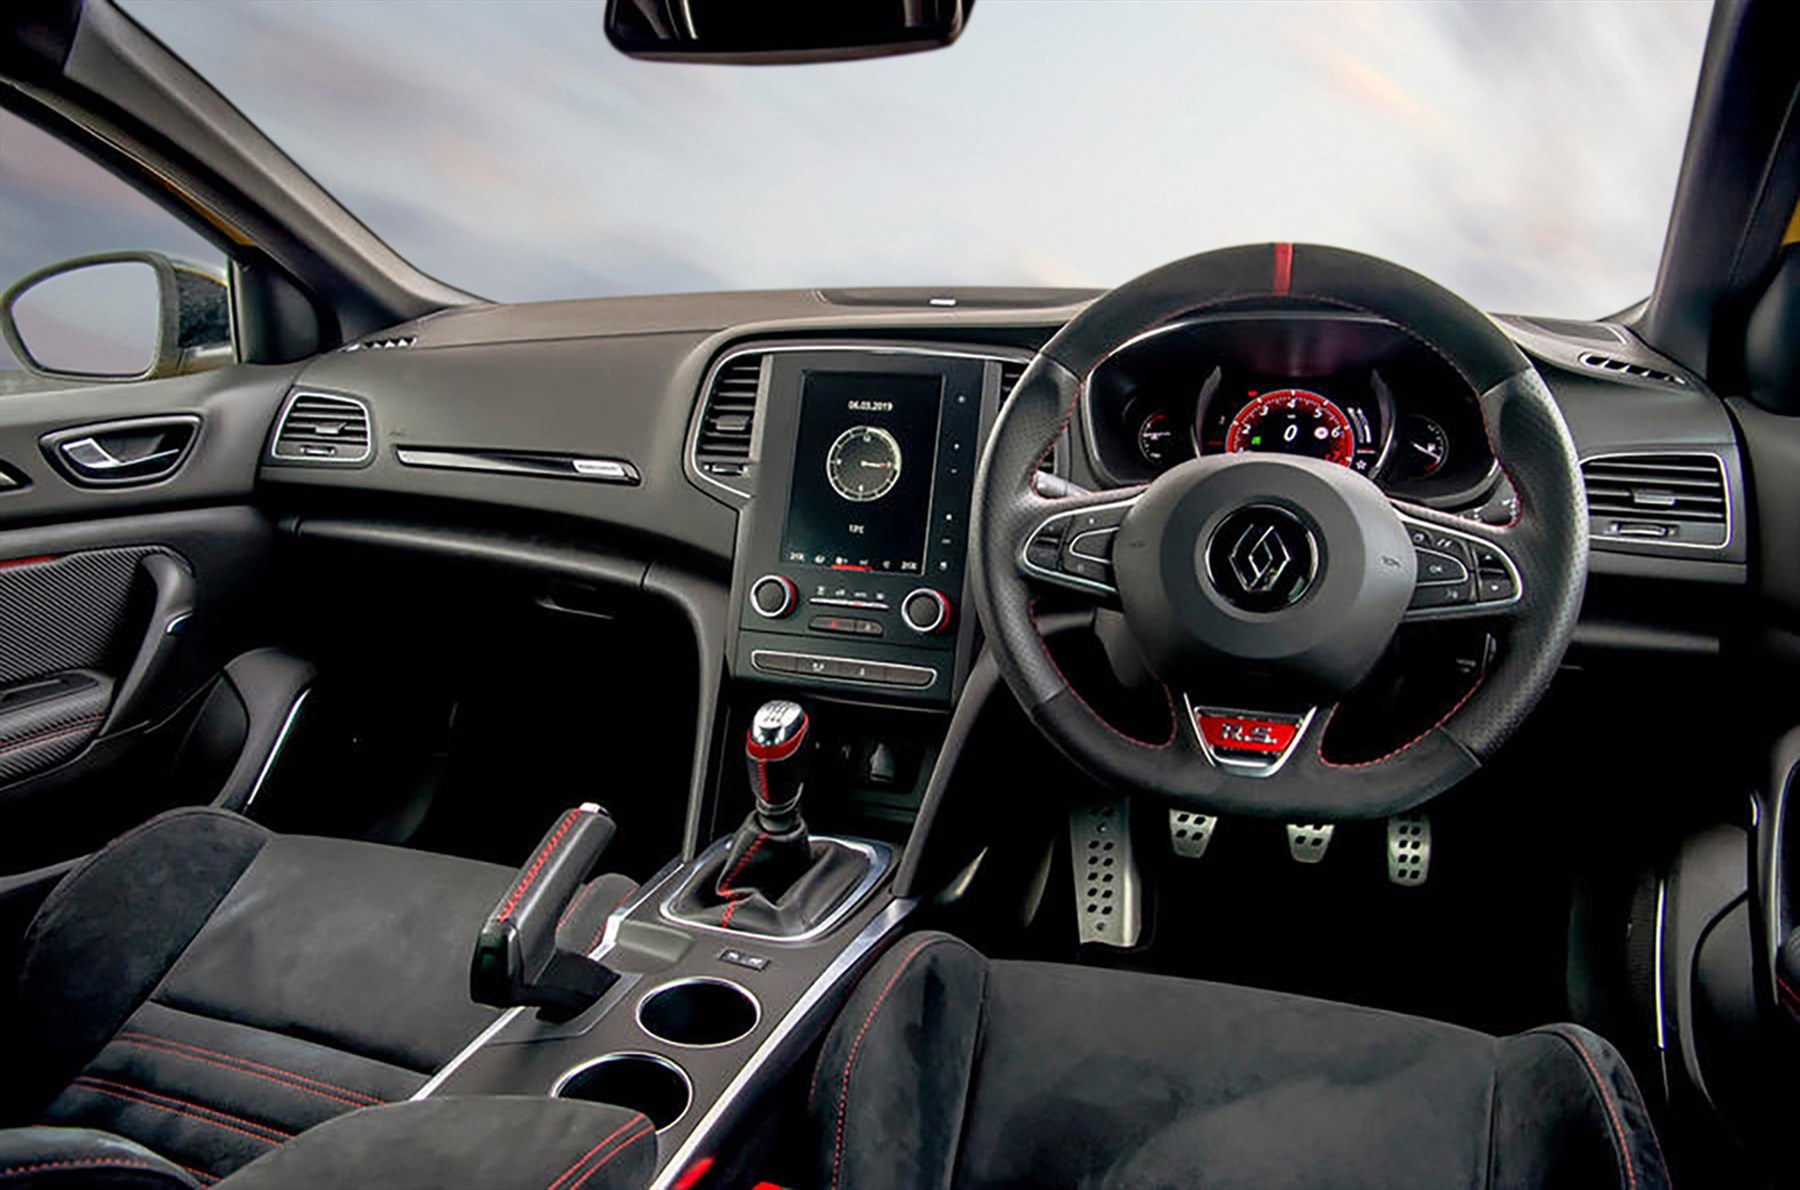 Renault meganers trophy interior rhd sml 1800x1800